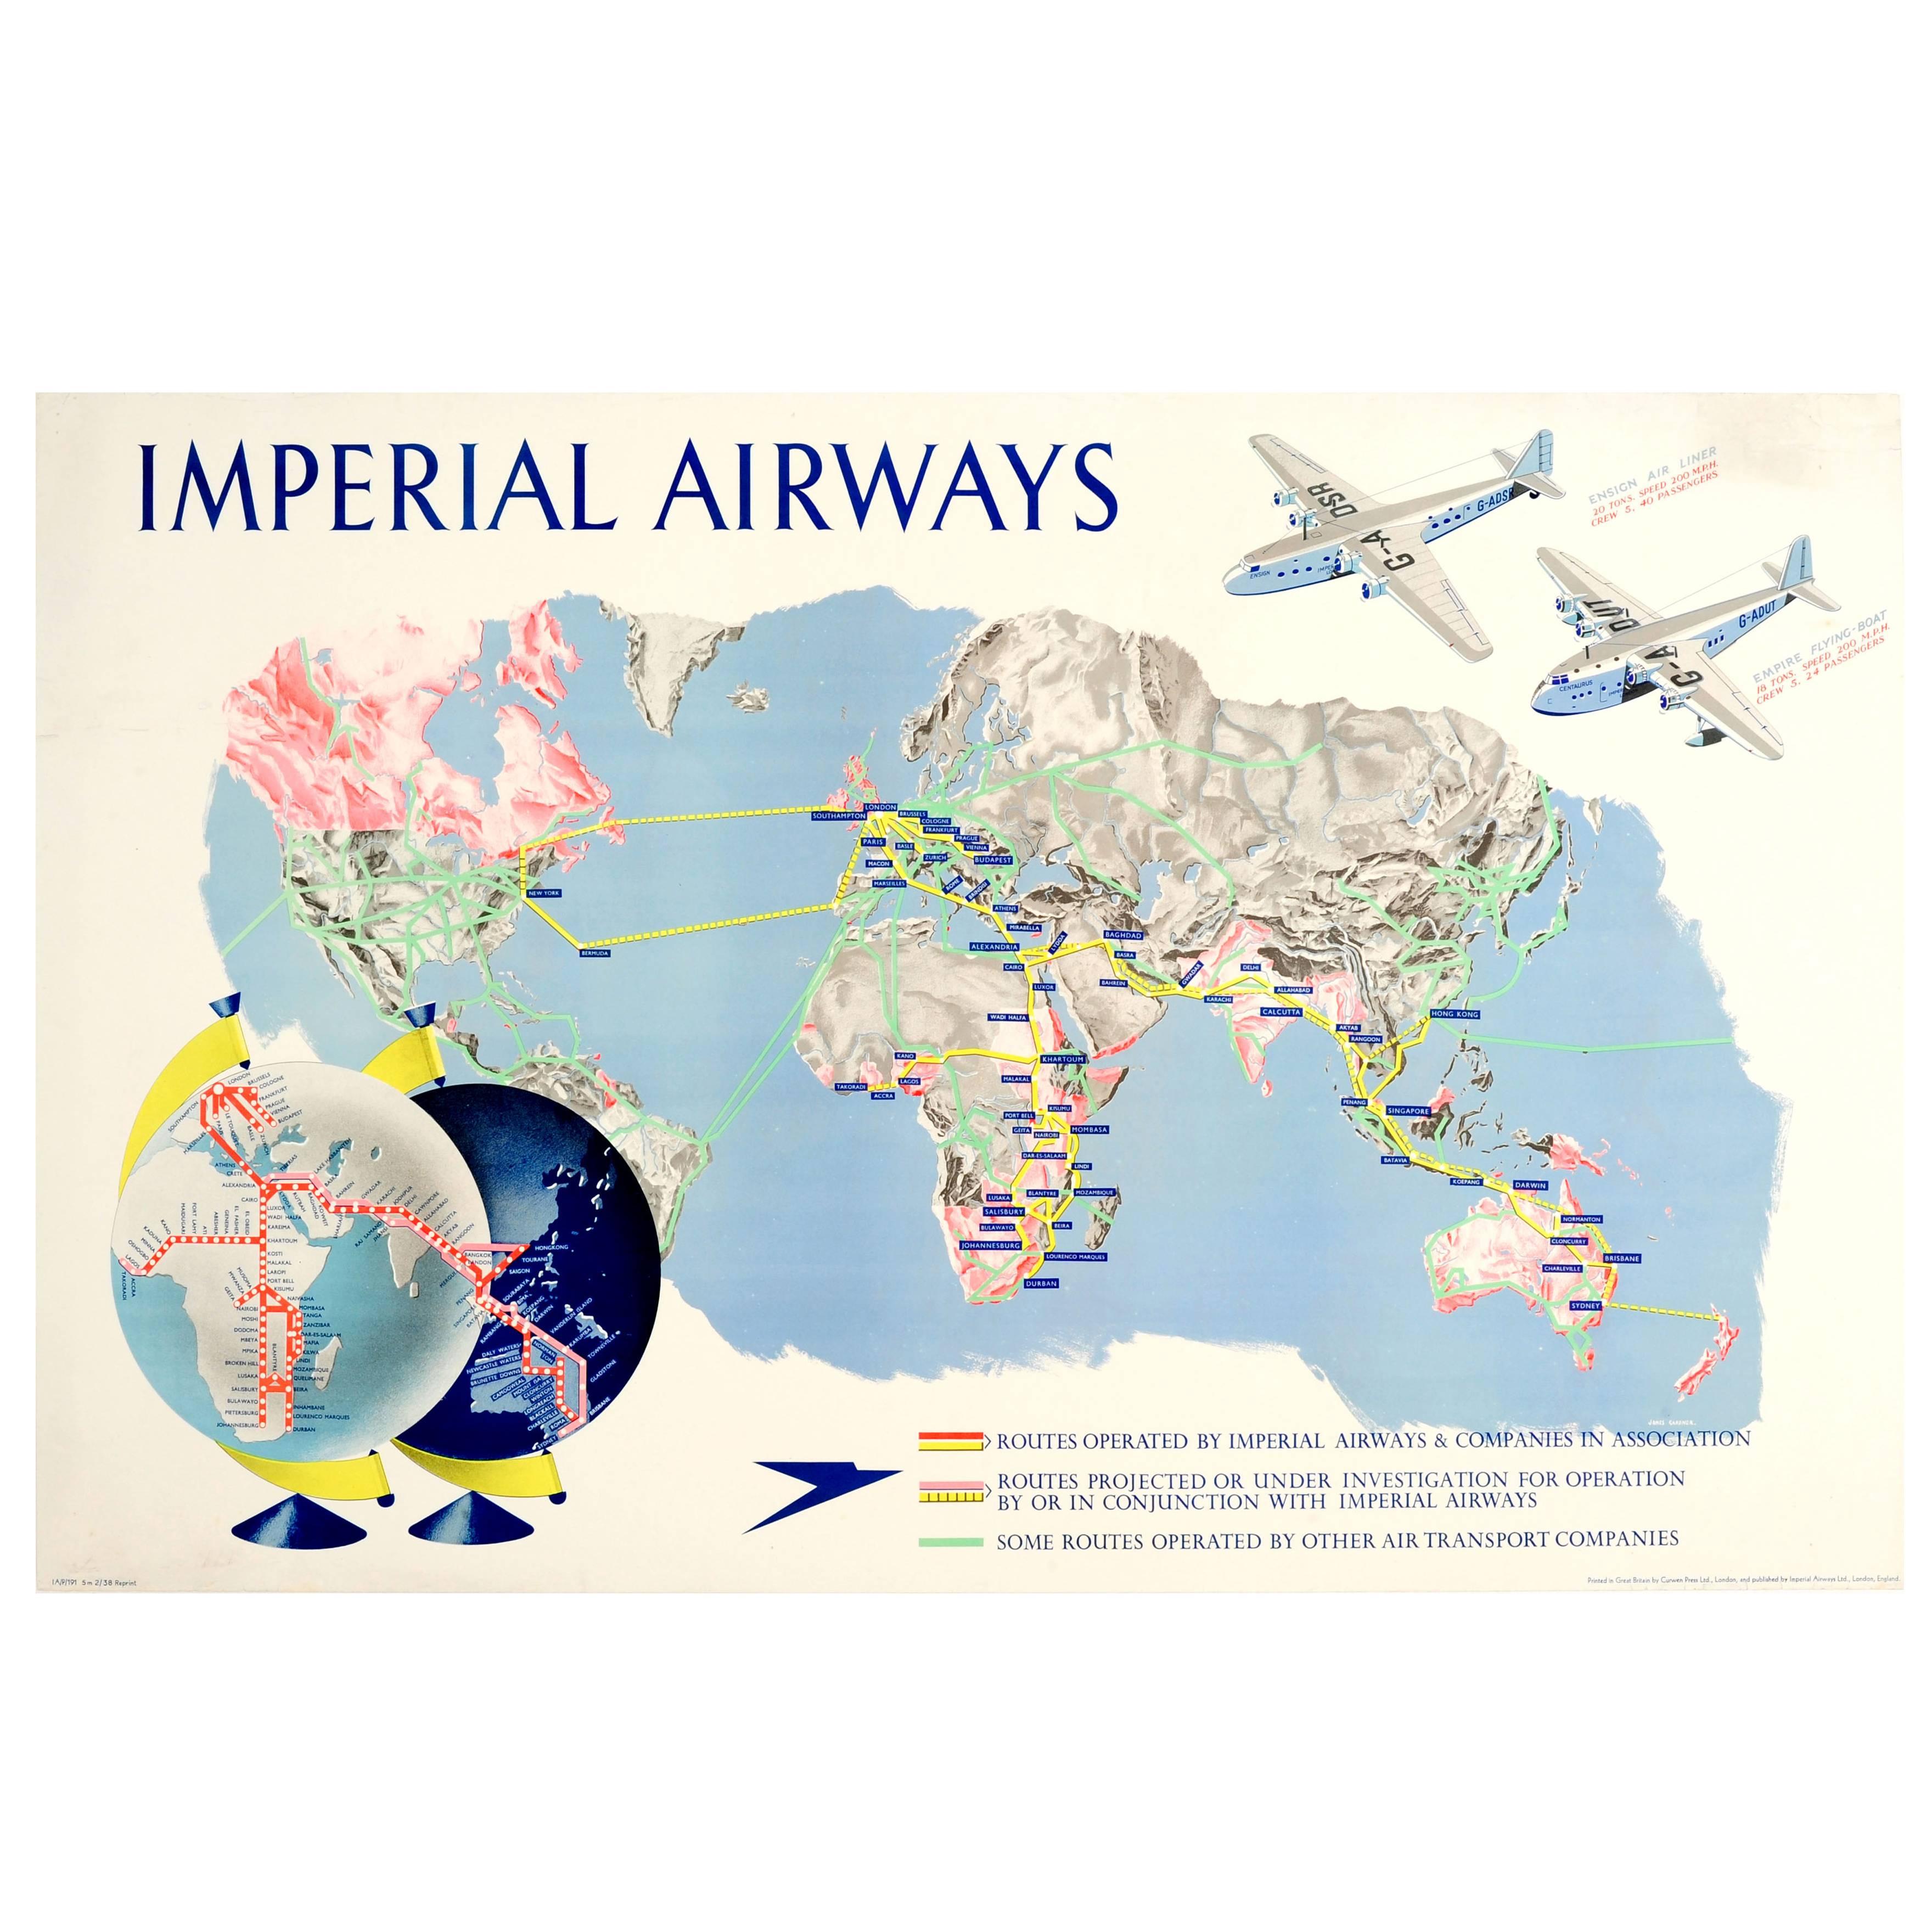 Original Vintage Imperial Airways Travel Advertising Poster Speedbird Route Map